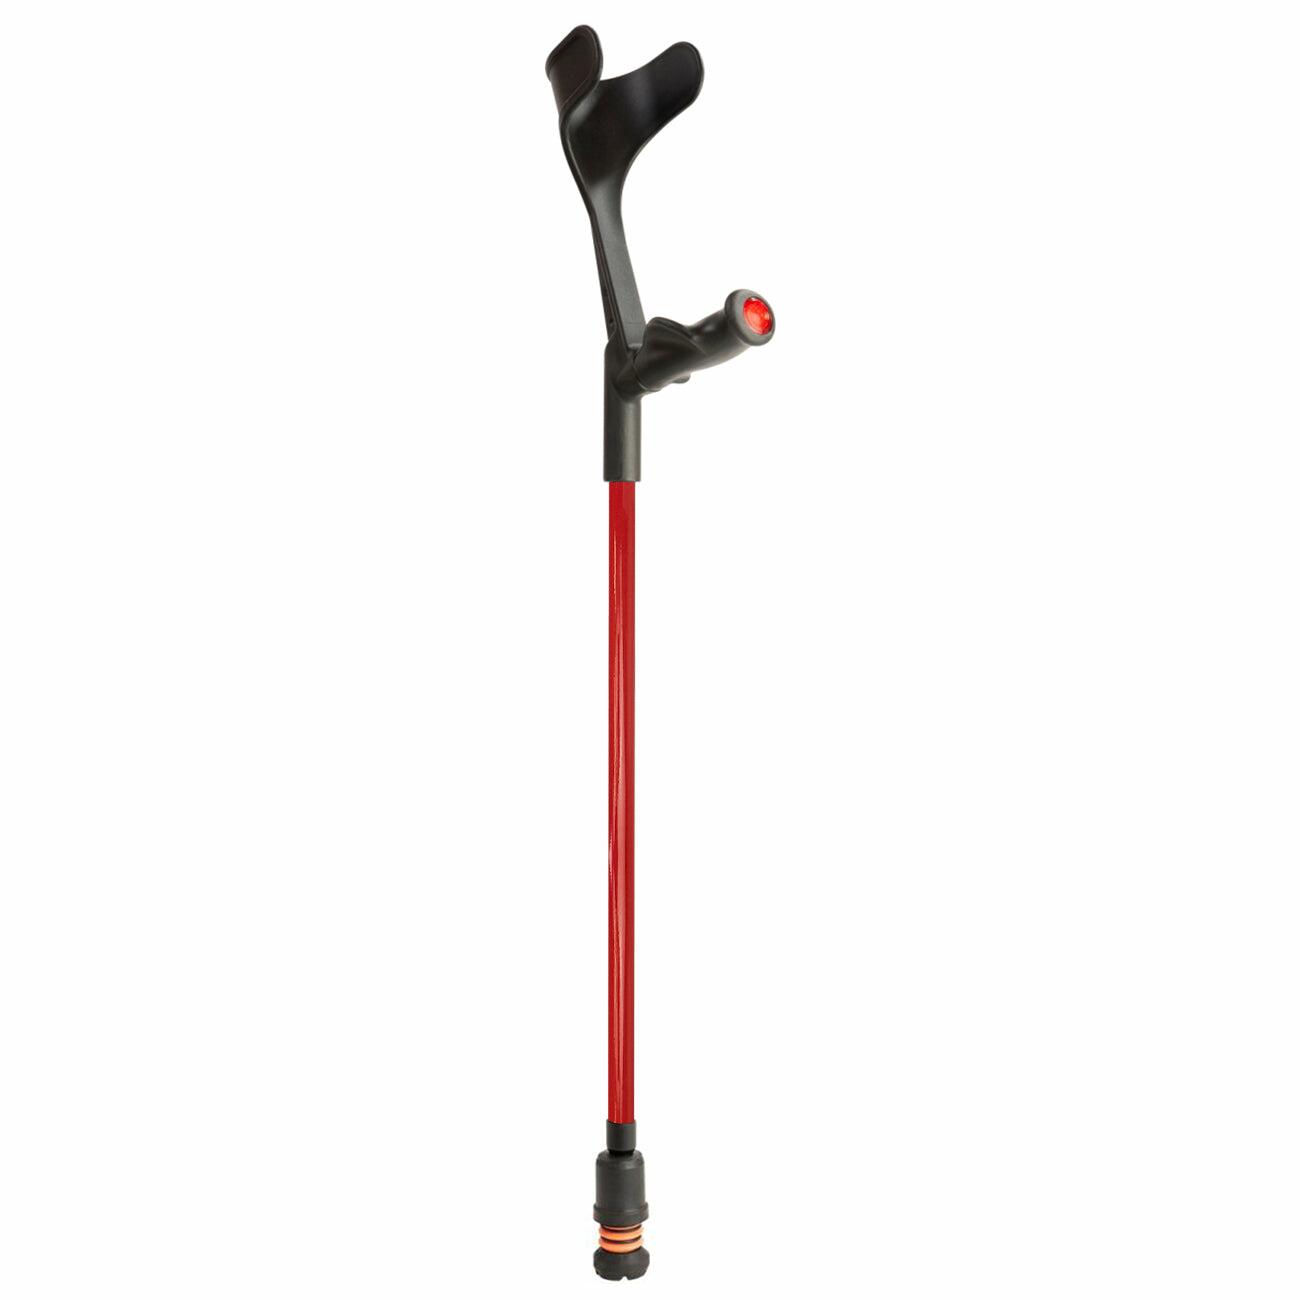 A single red Flexyfoot Comfort Grip Open Cuff Crutch